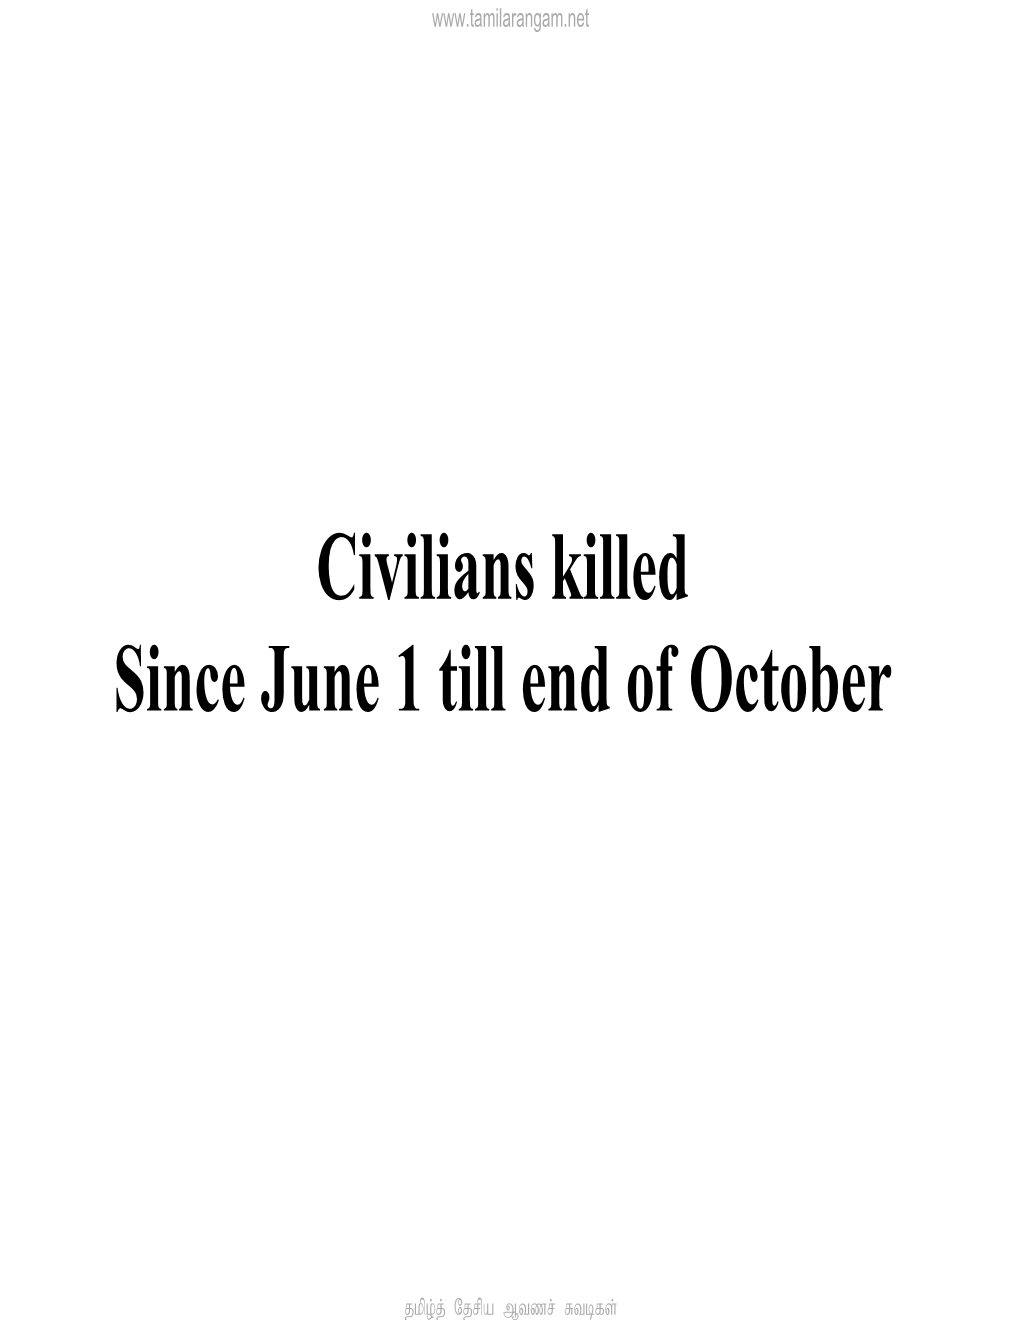 Civilians Killed Since June 1 Till End of October